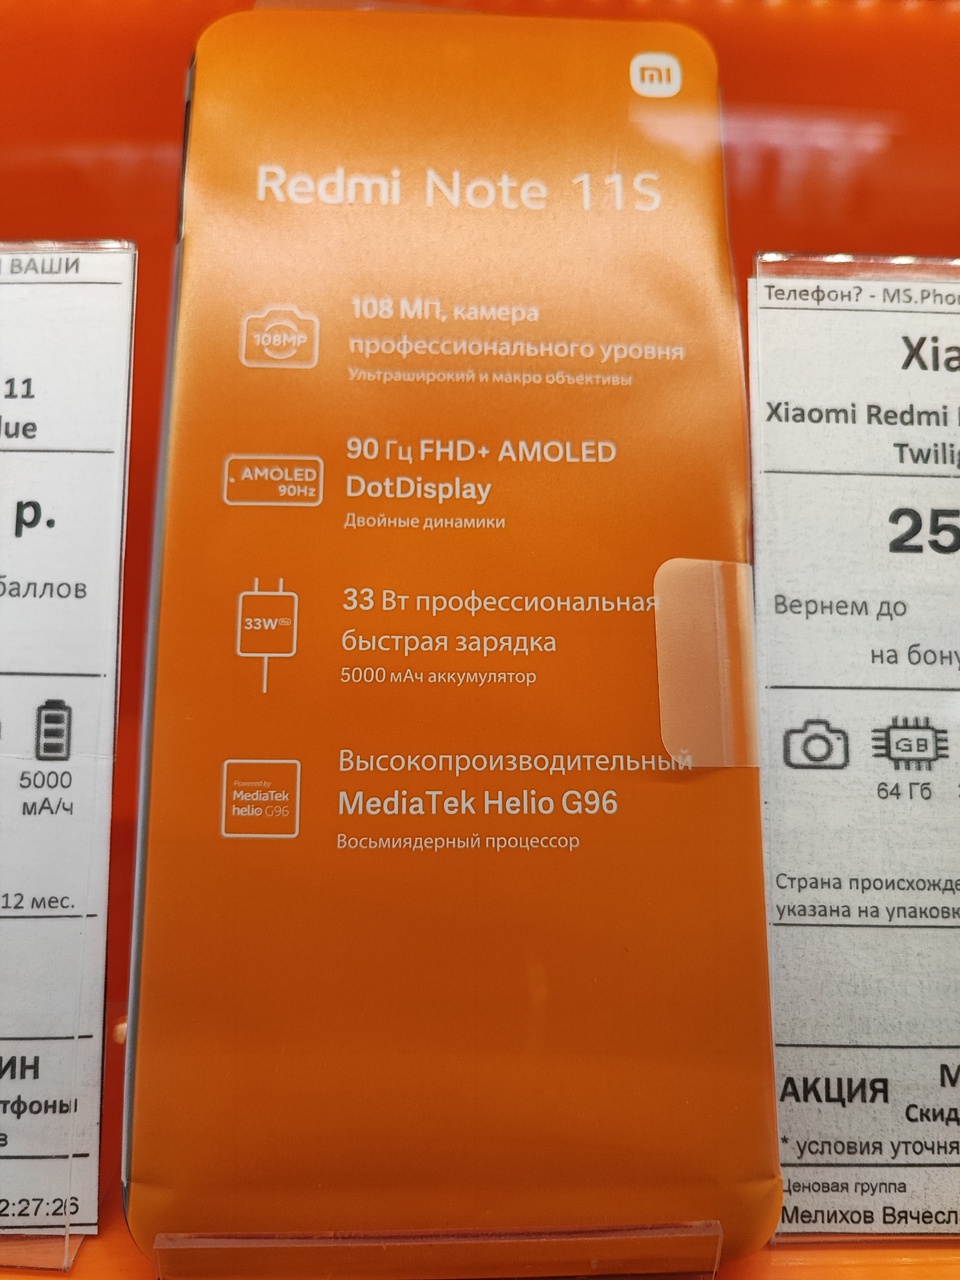 Xiaomi redmi note 11S - 27 990 ₽, заказать онлайн.